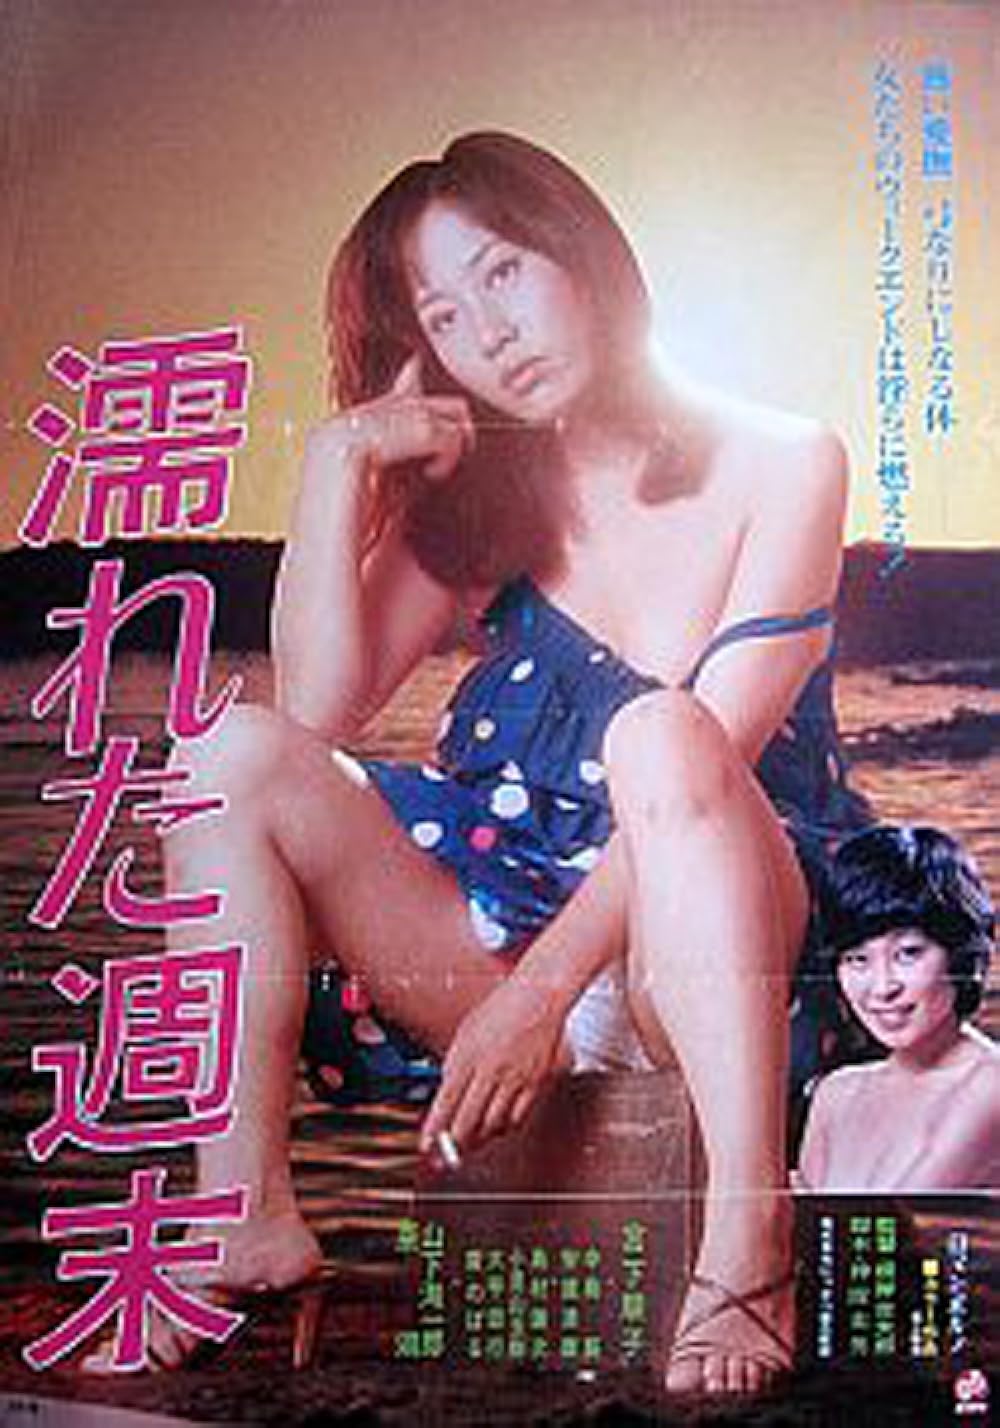 18+ Wet Weekend 1979 Japanese 300MB HDRip 480p Download